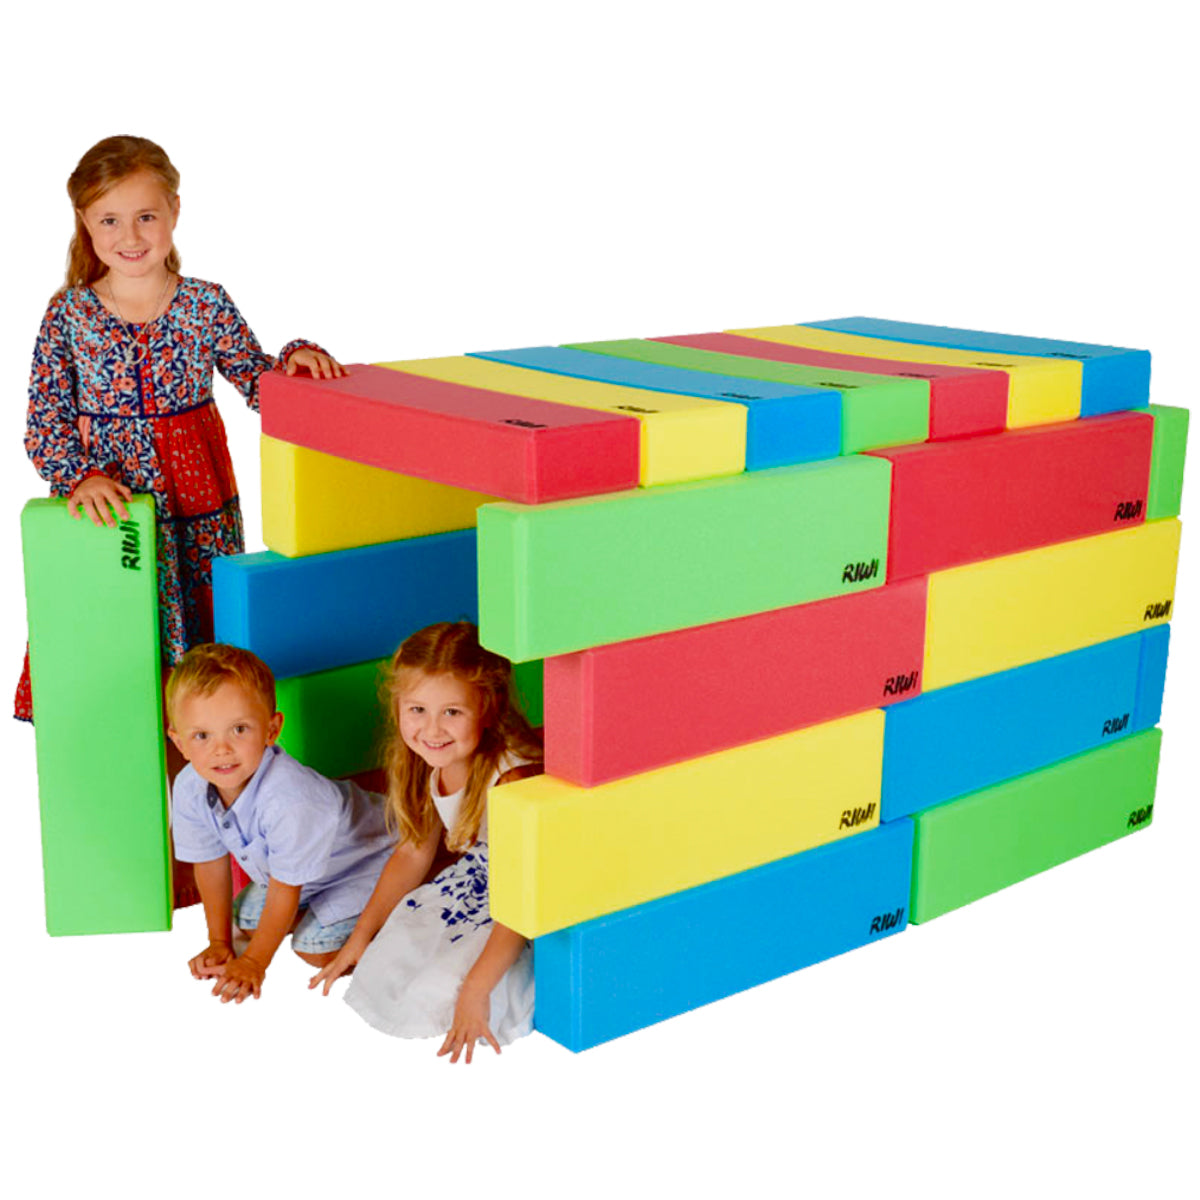 RIWI building blocks kindergarten soft foam blocks xl large 